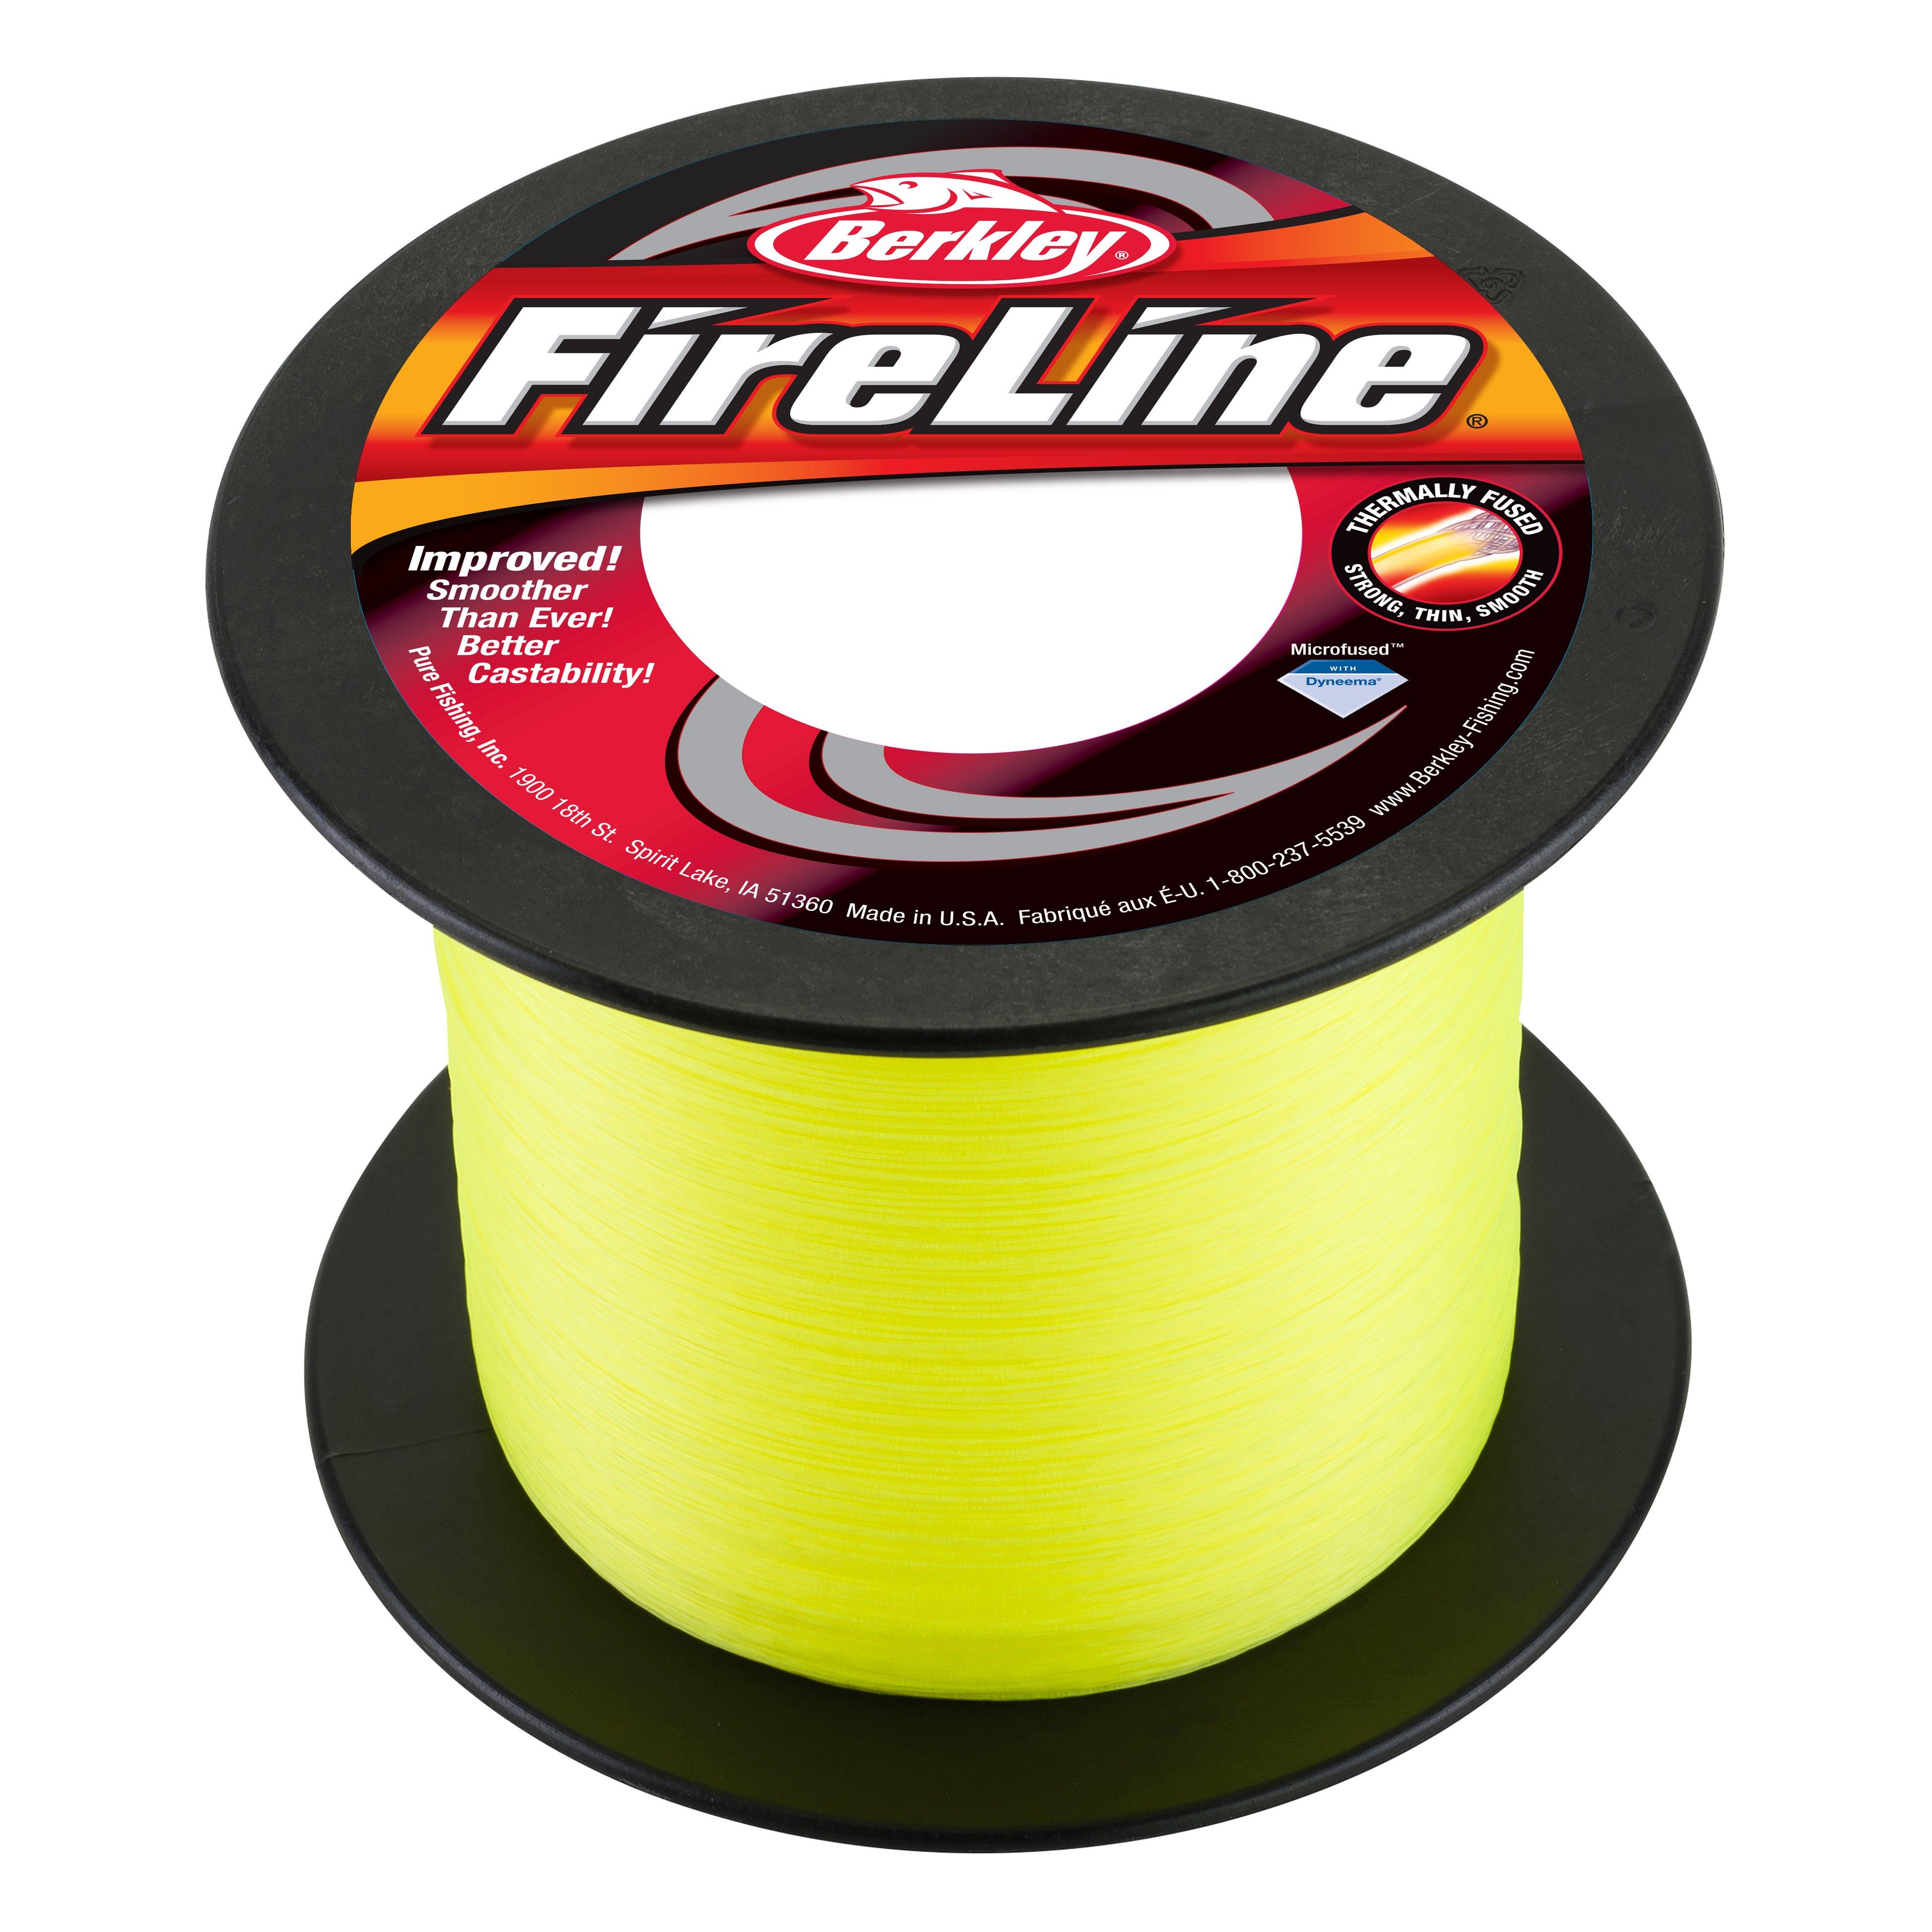  Fireline Braided Fishing Line